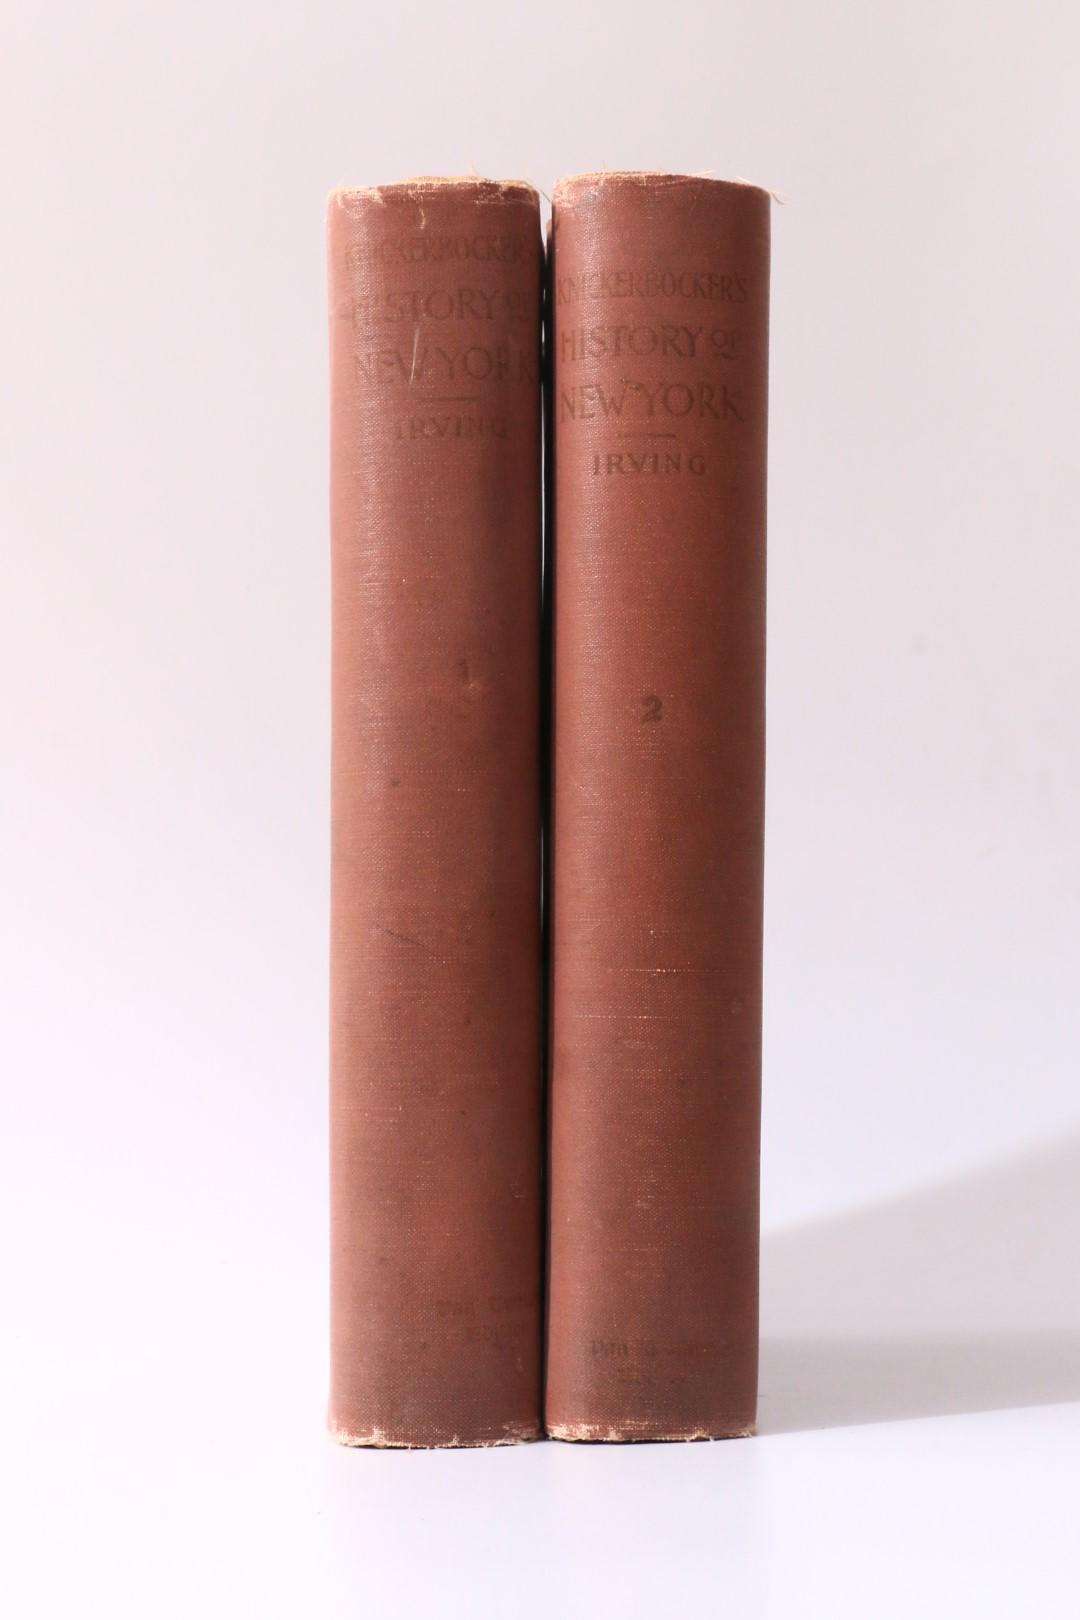 Washington Irving - Knickerbocker's History of New York: Van Twiller Edition - G.P. Putnam's, 1894, First Edition.